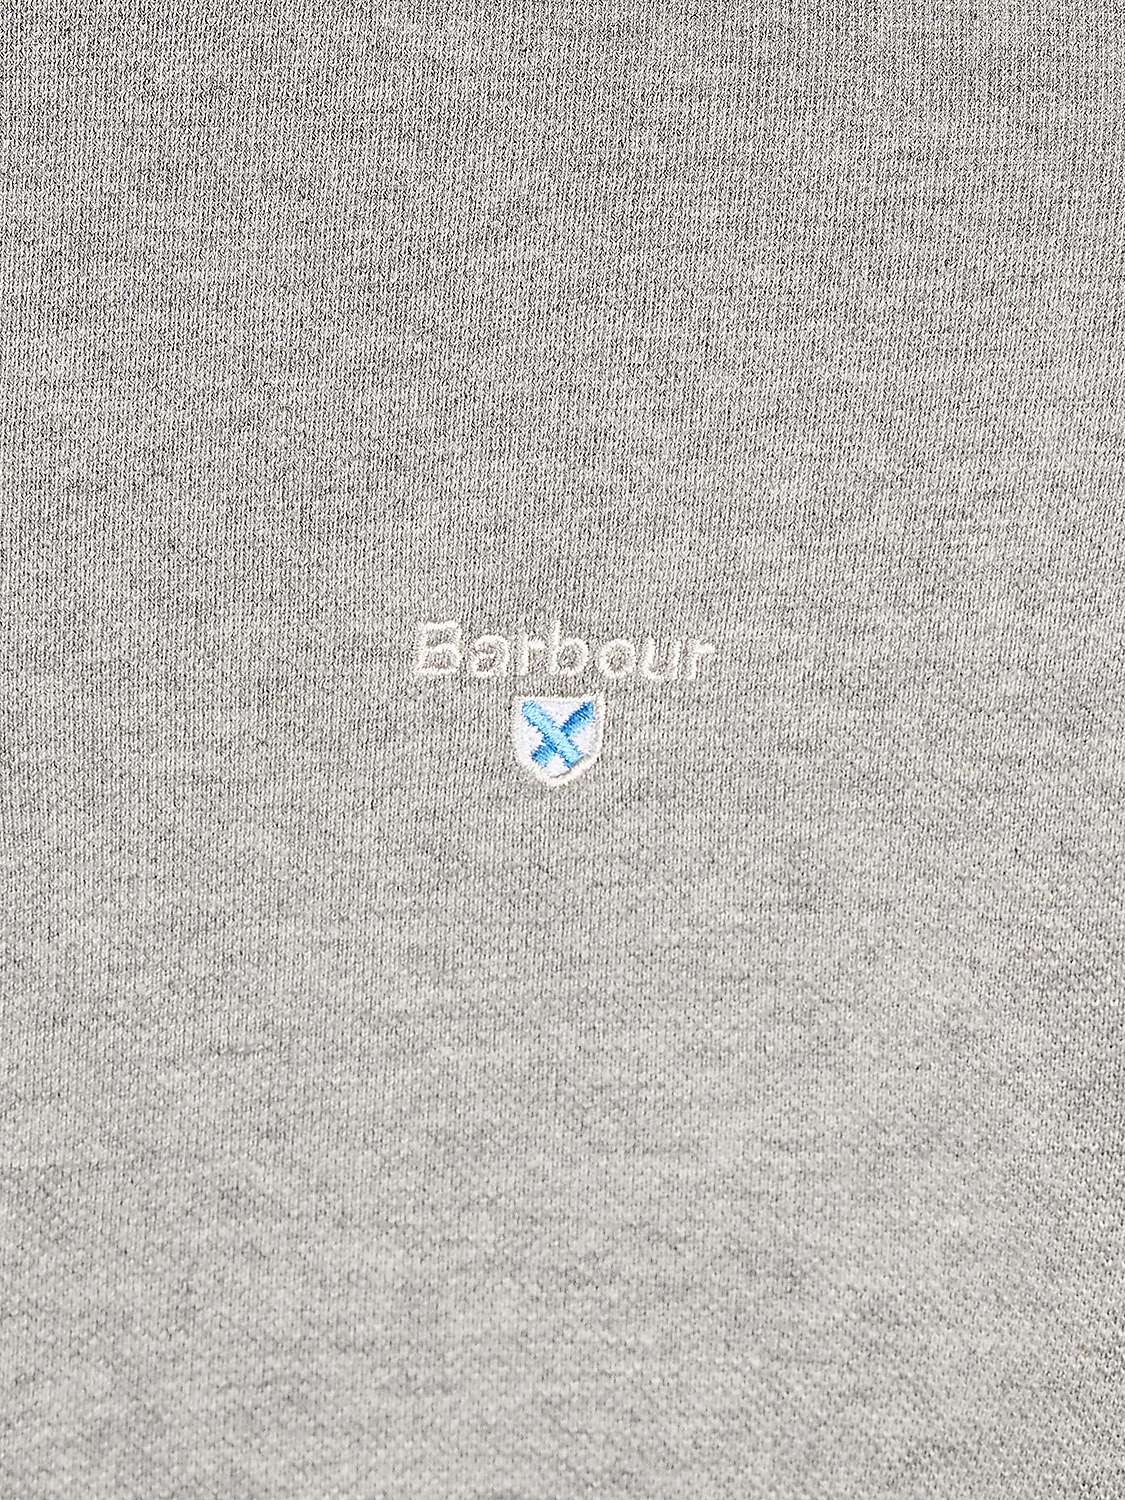 Buy Barbour Tartan Pique Polo Shirt Online at johnlewis.com